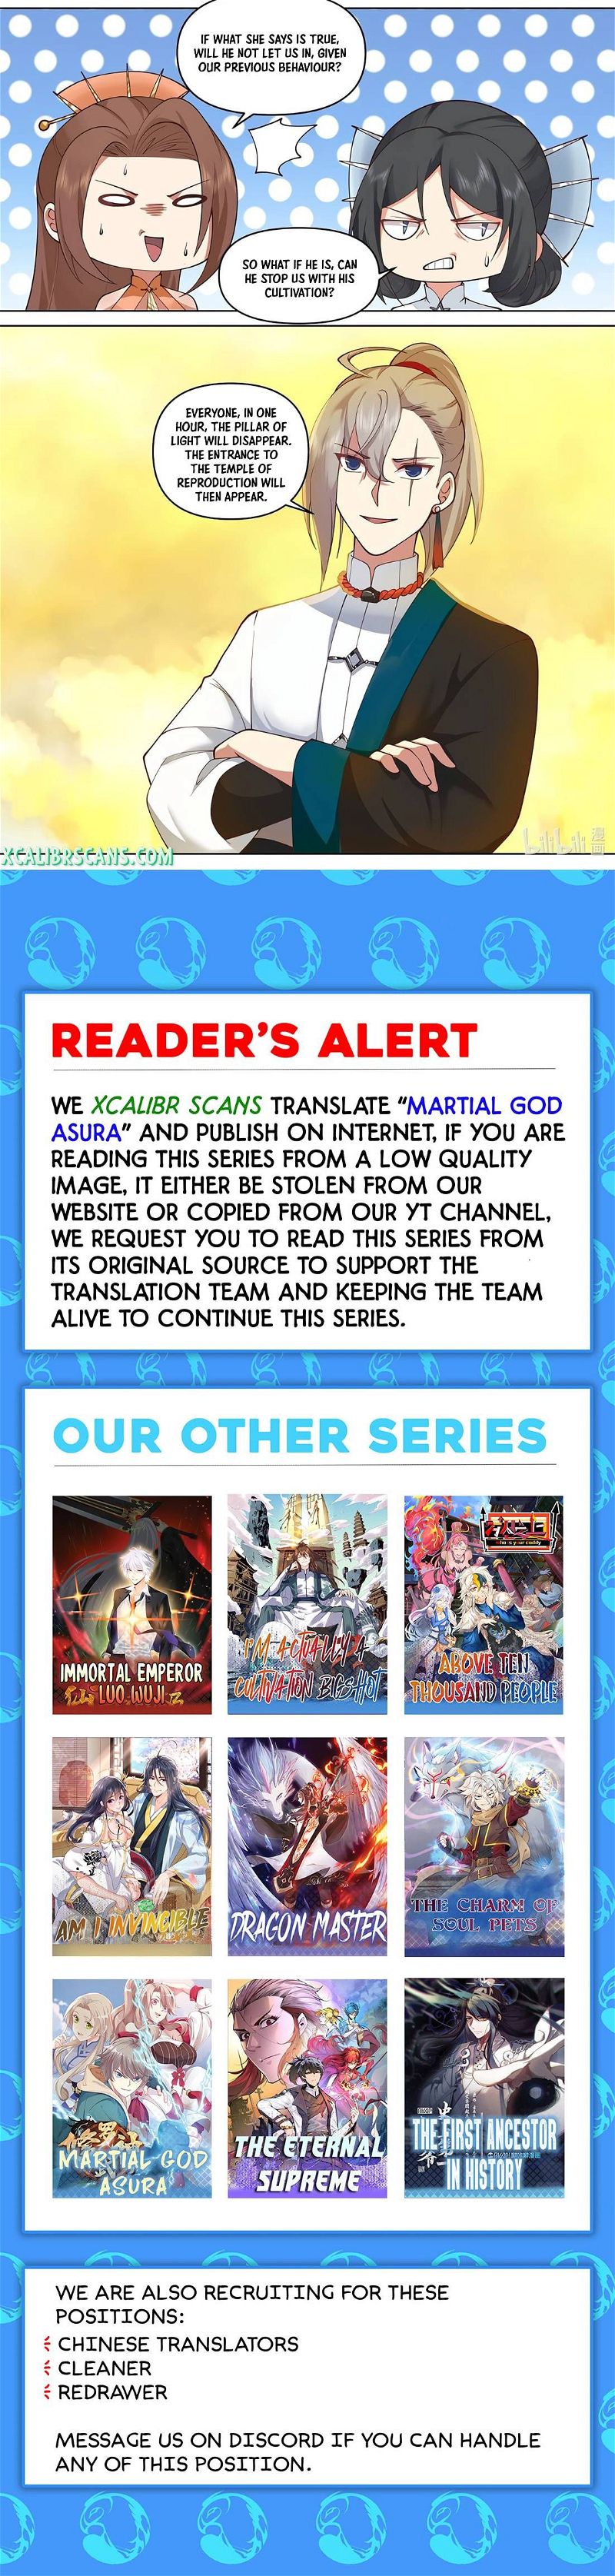 Martial God Asura Chapter 475 page 10